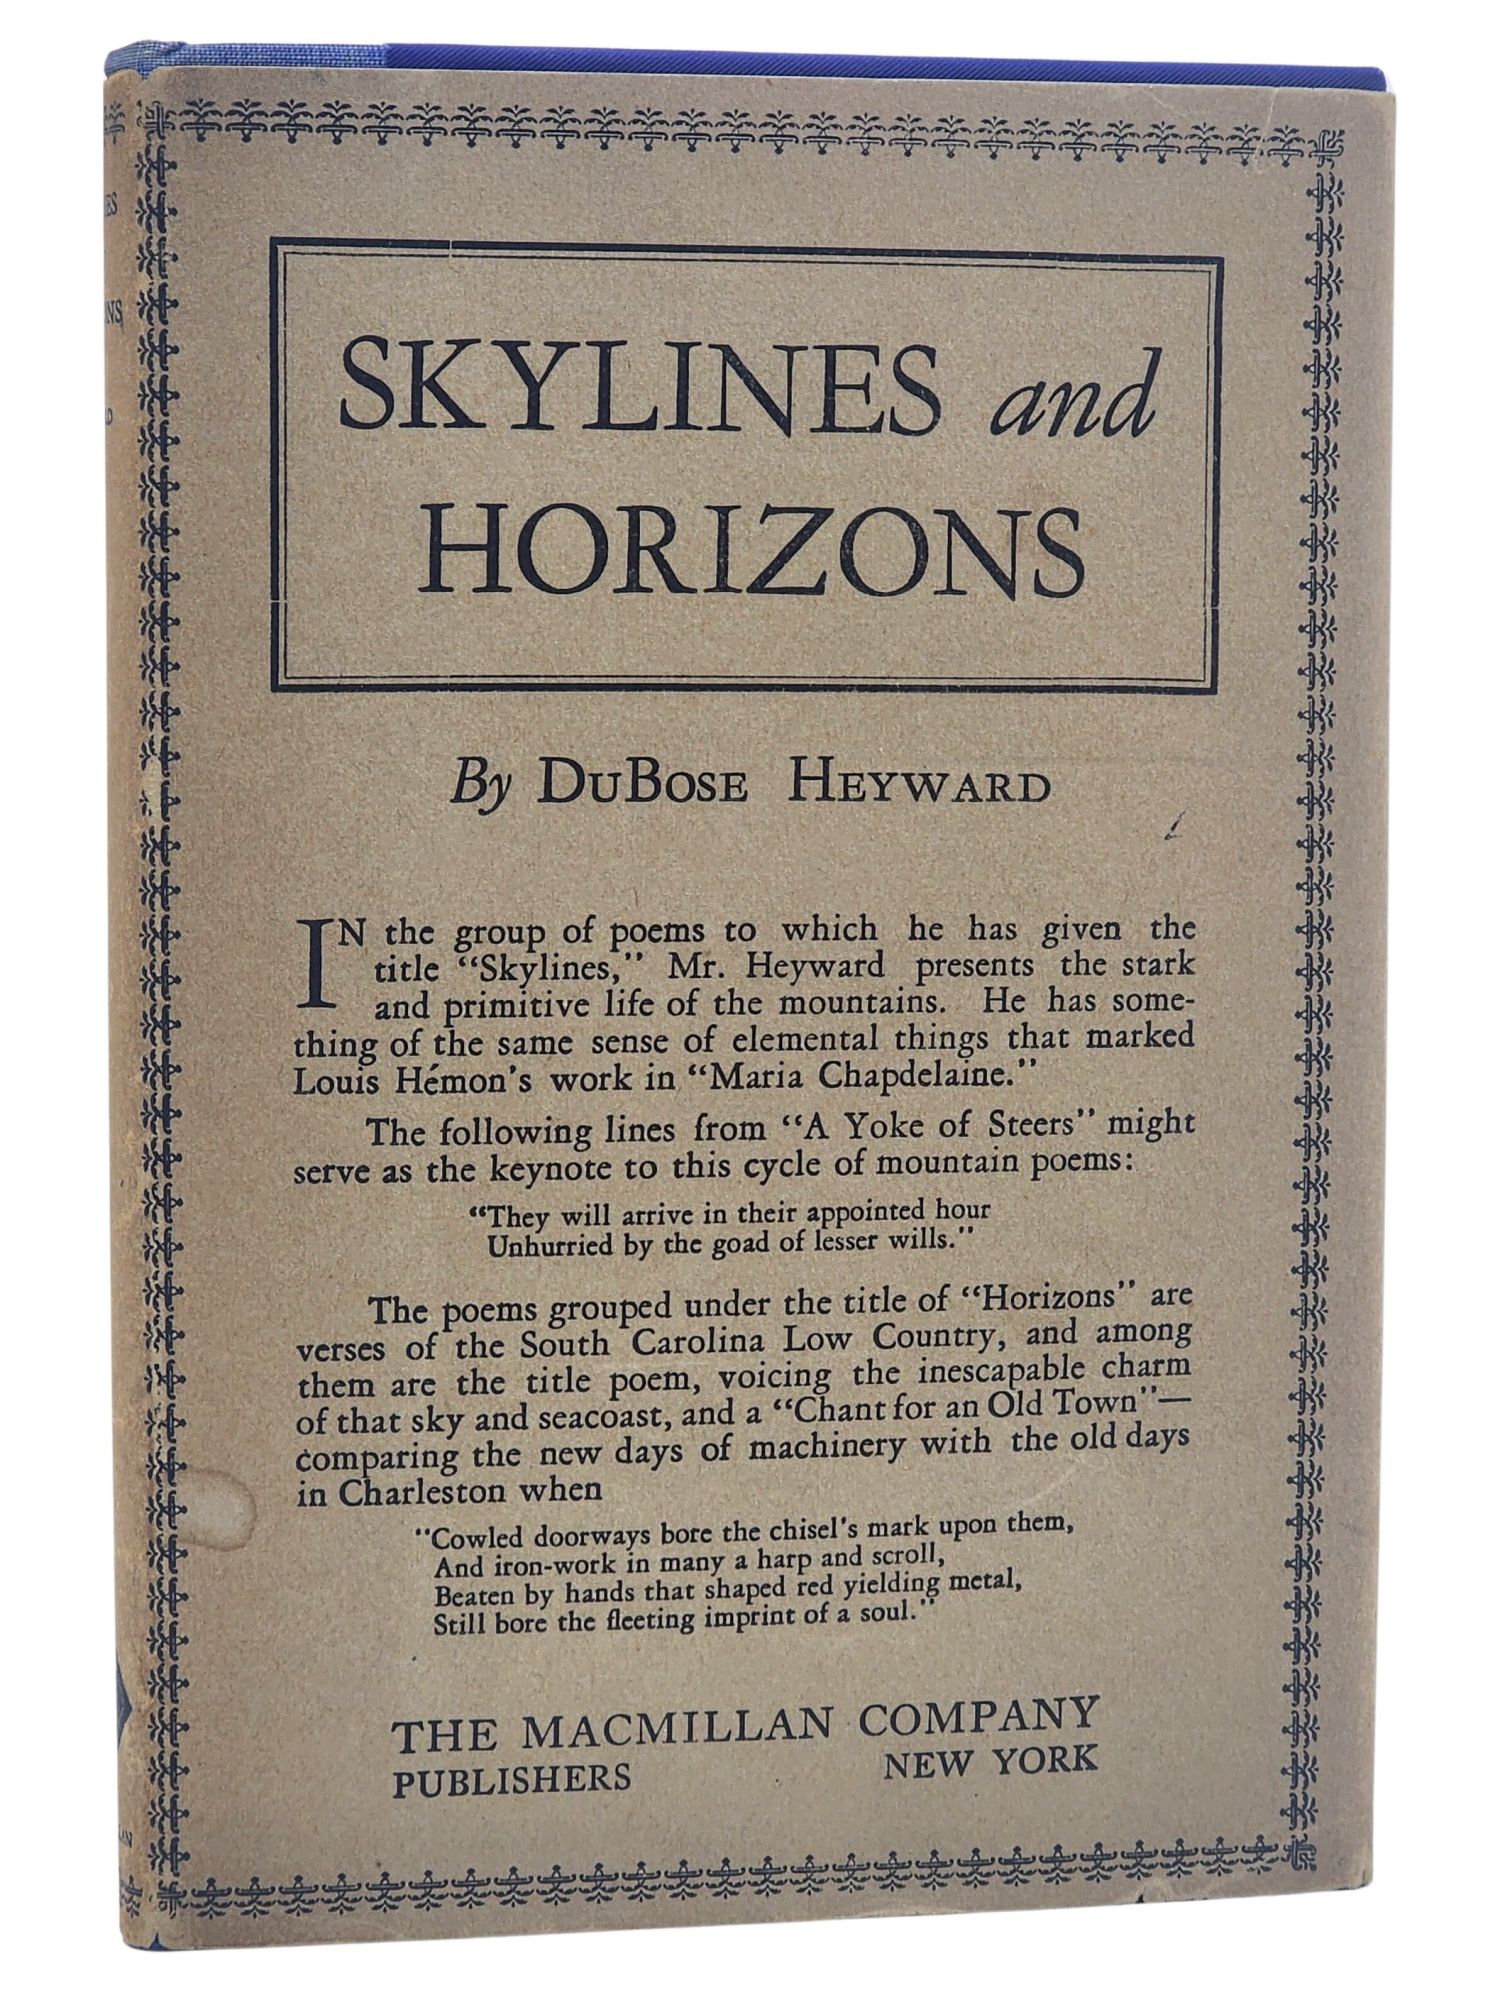 [Book #26679] SKYLINES and HORIZONS. DuBose Heyward.